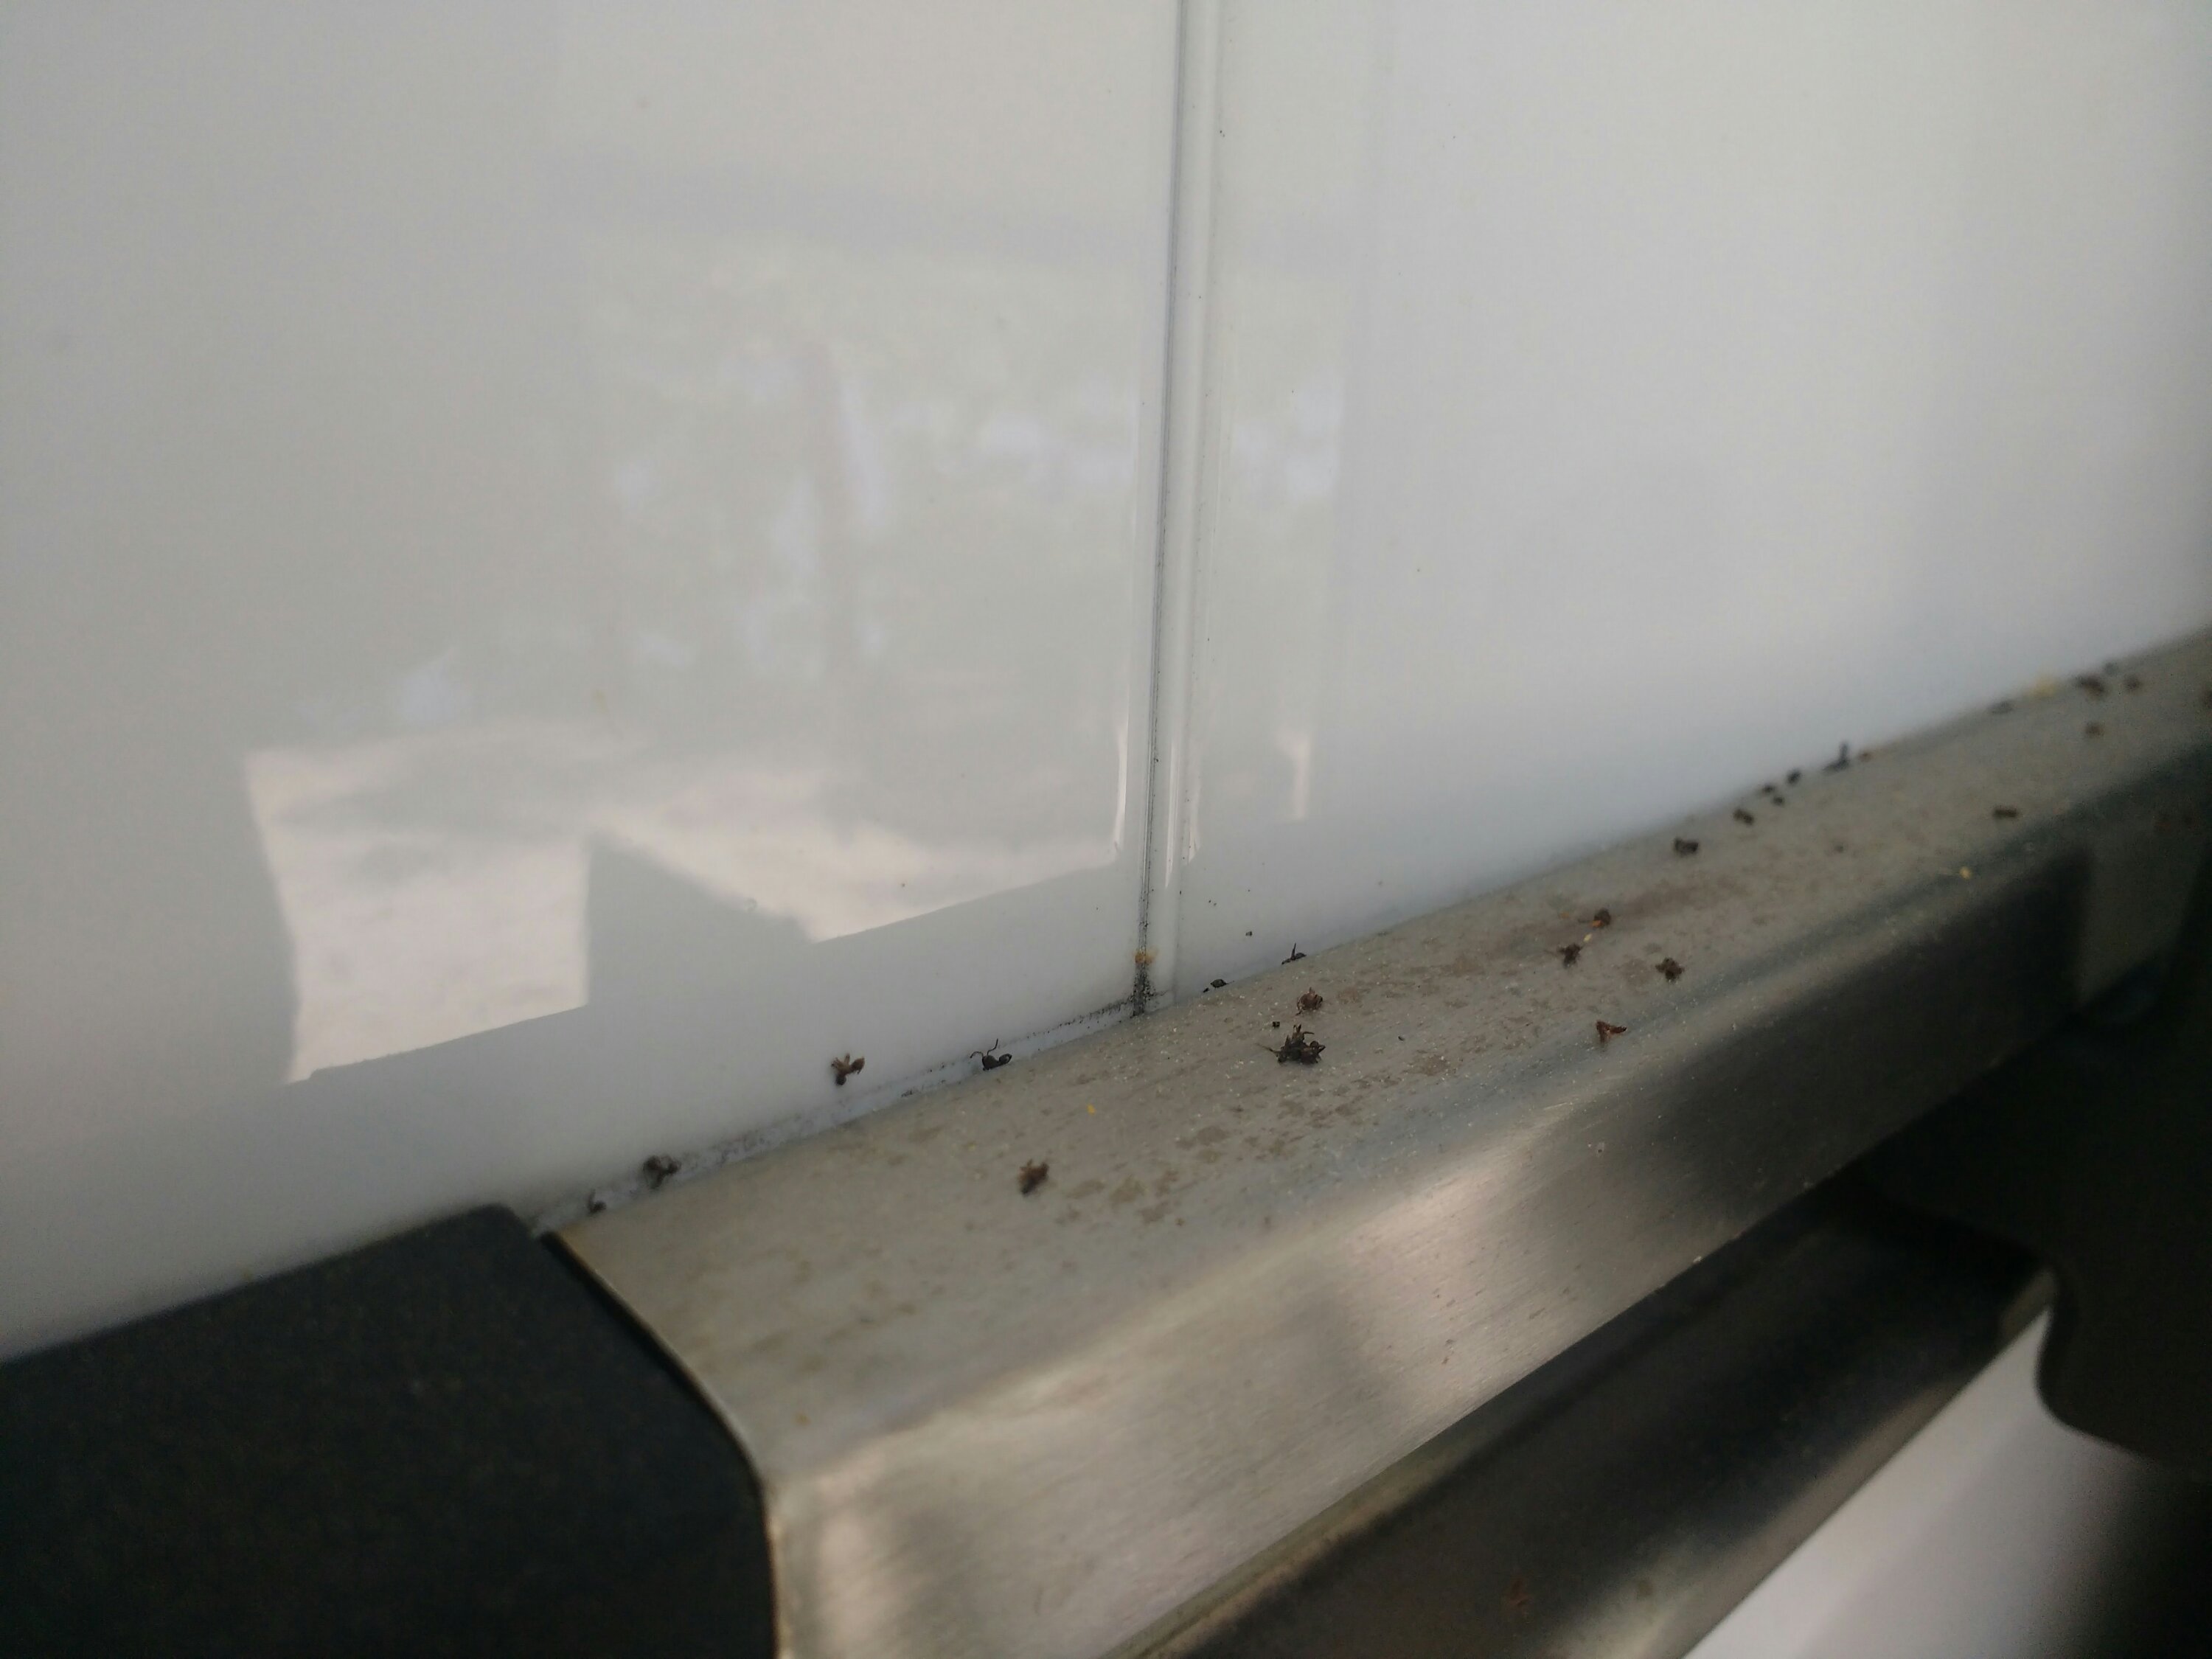 Dead ants on the slider traxk